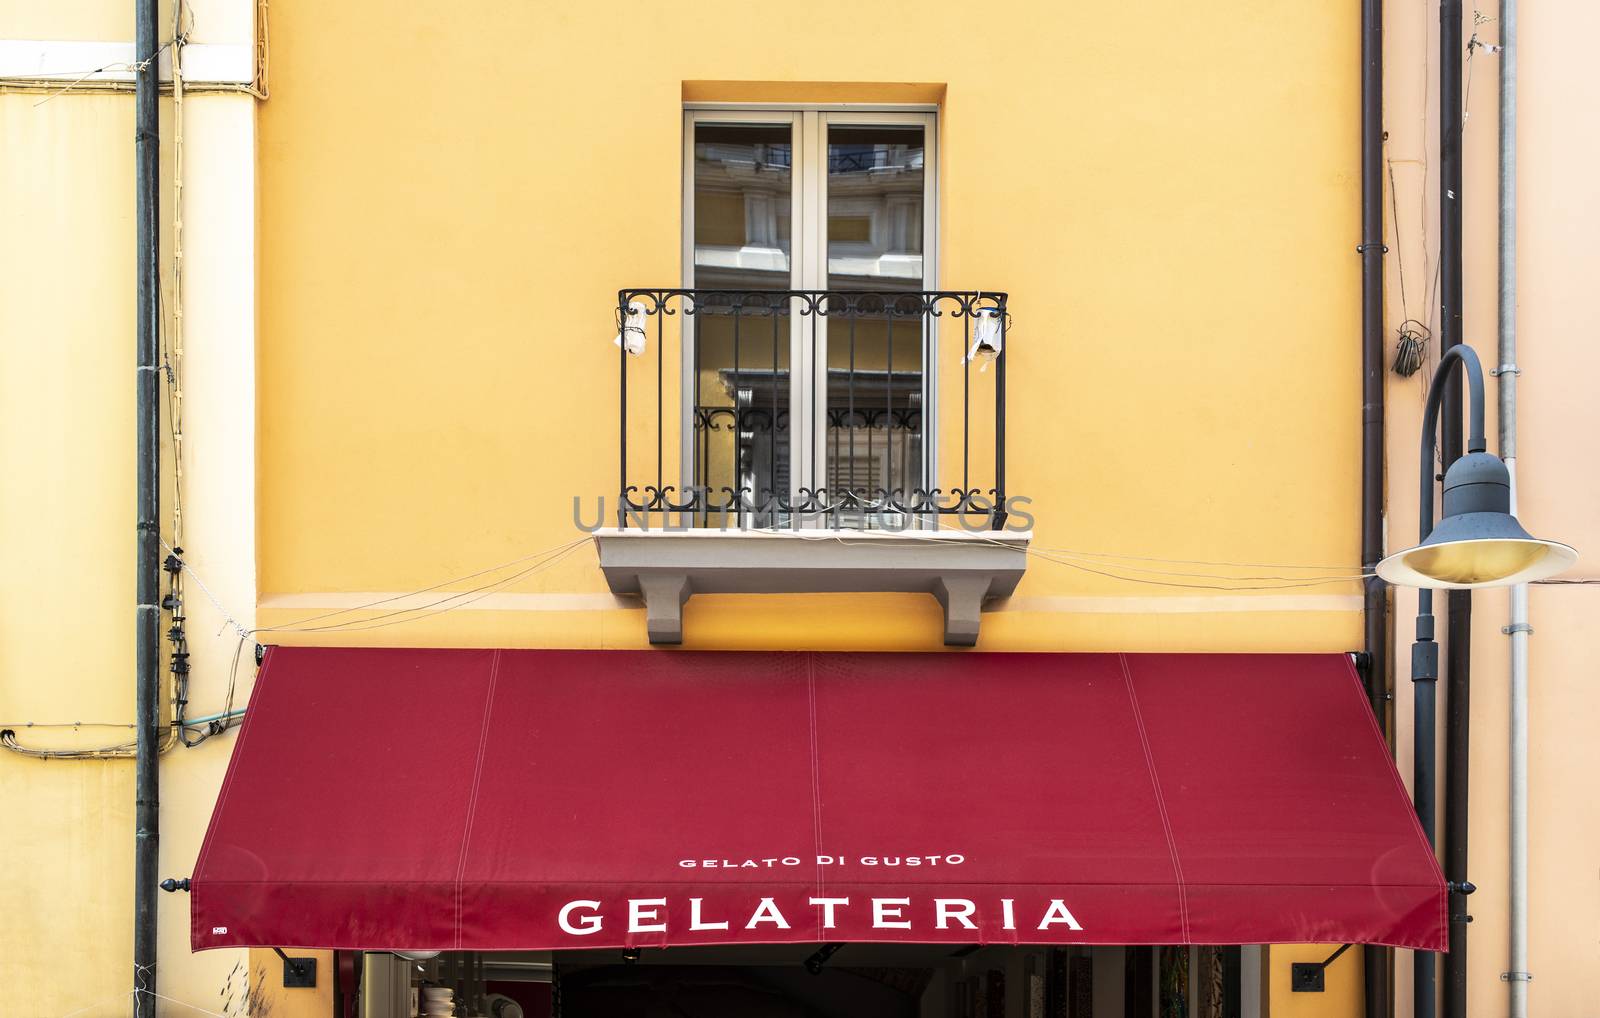 Italian ice cream shop. Text gelateria on sunshade. Italian architecture.